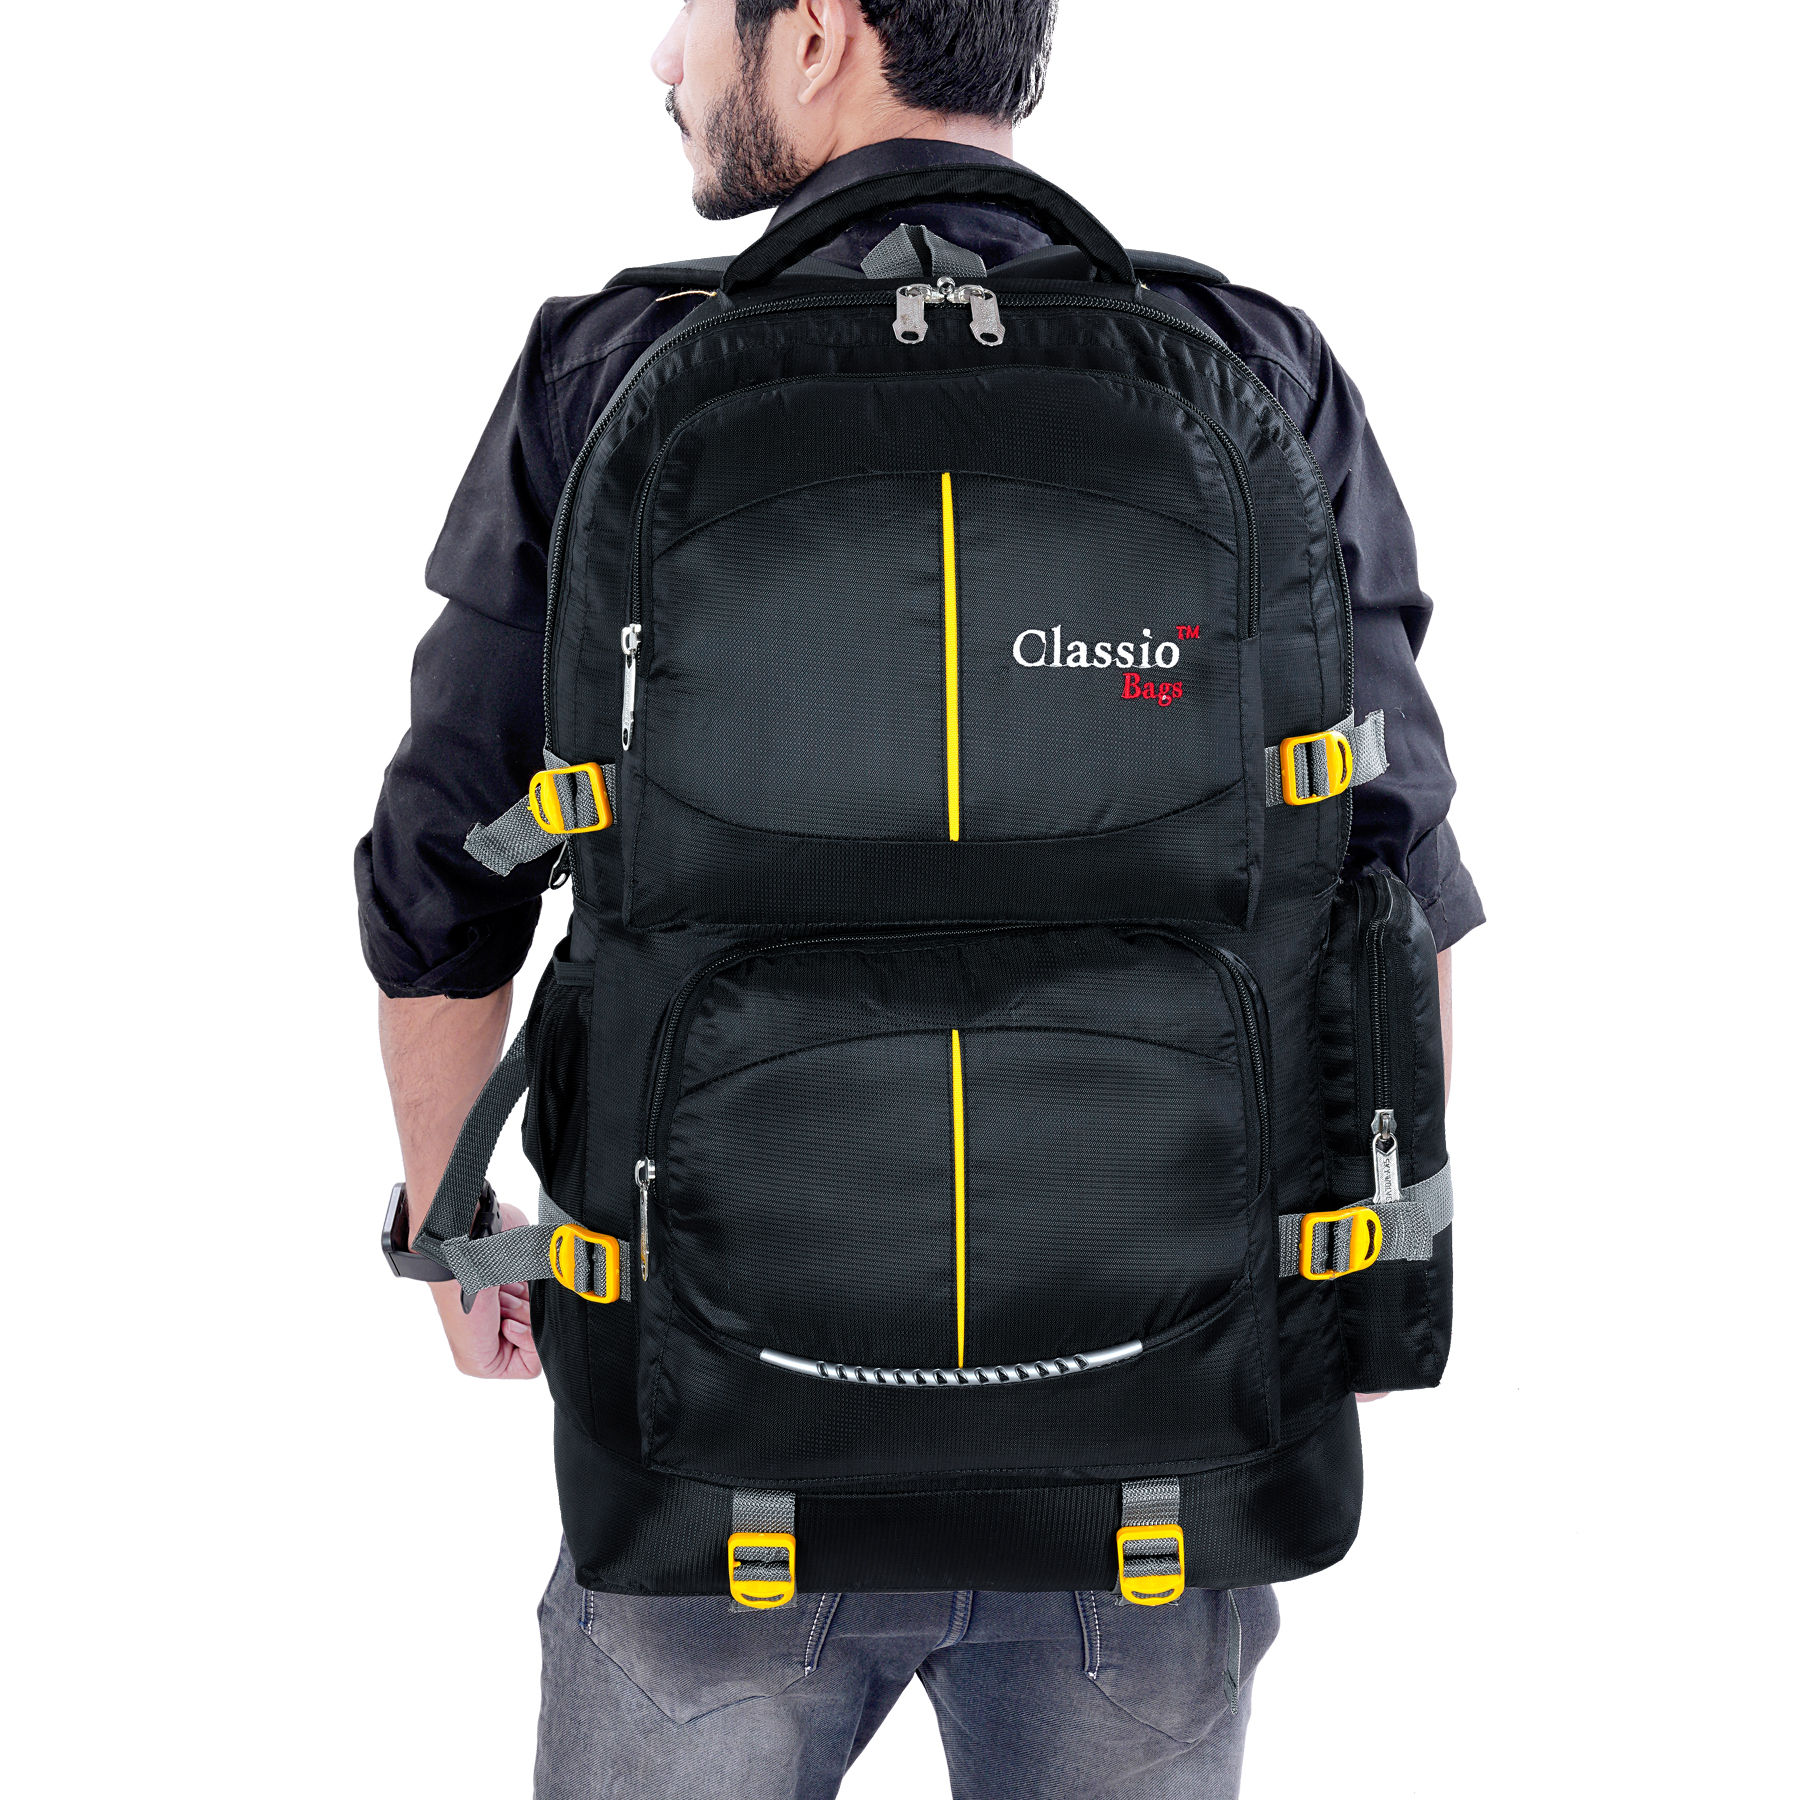 Classio Travel Backpack